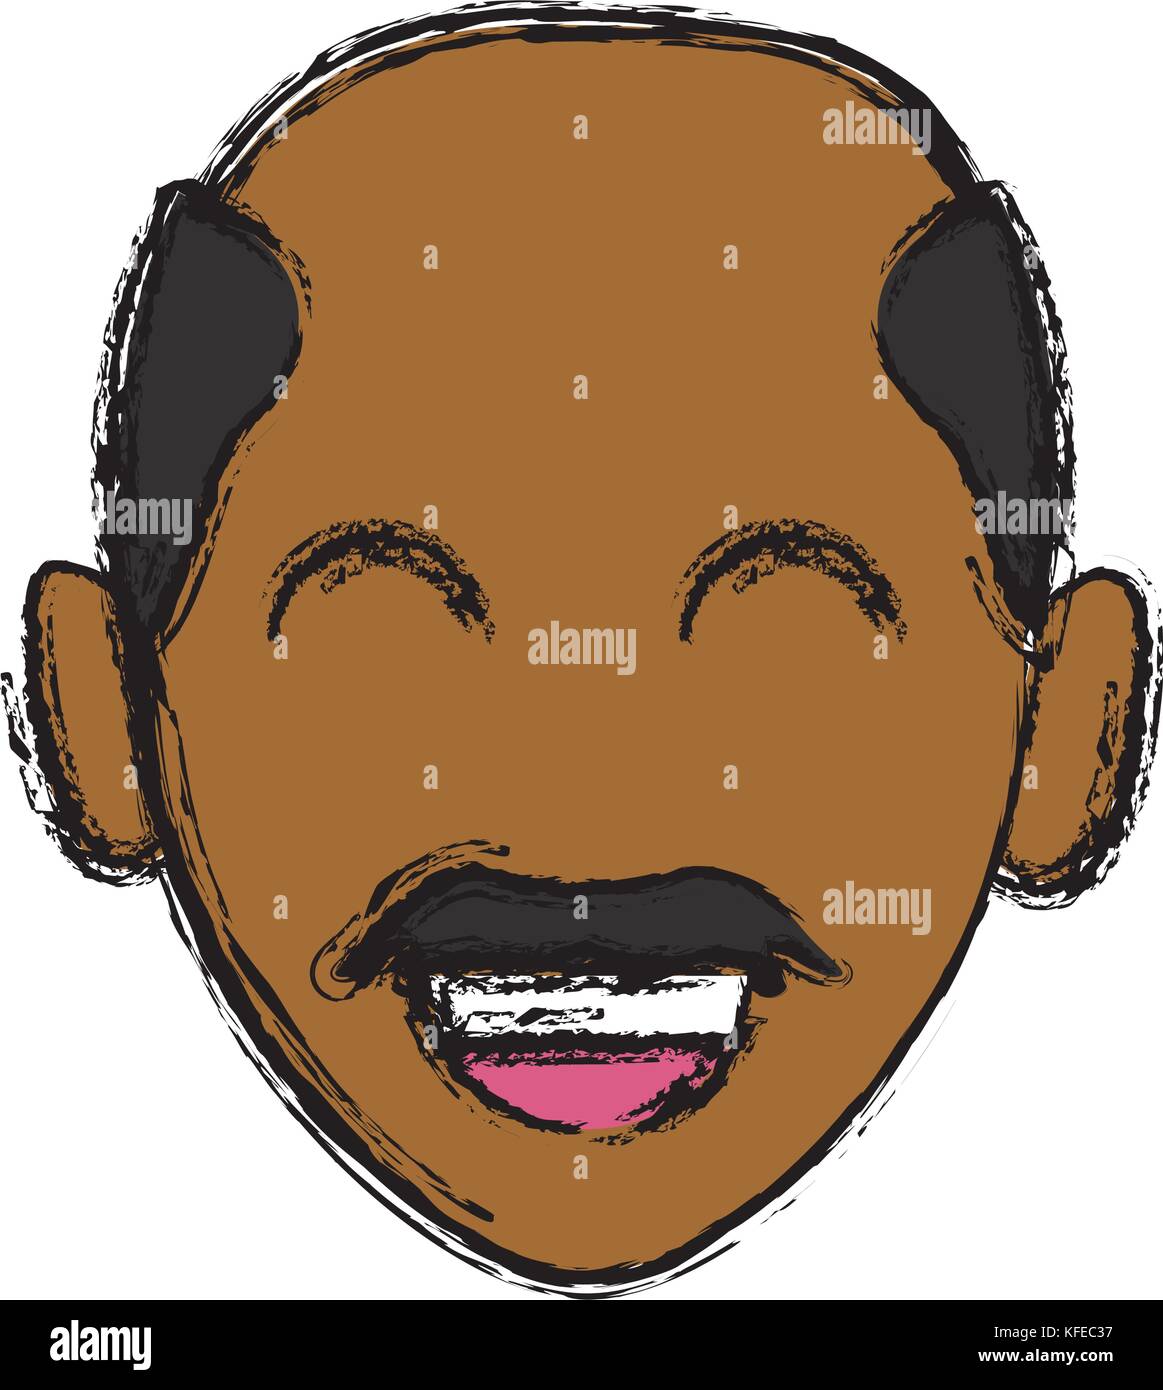 Man smiling cartoon Illustration de Vecteur